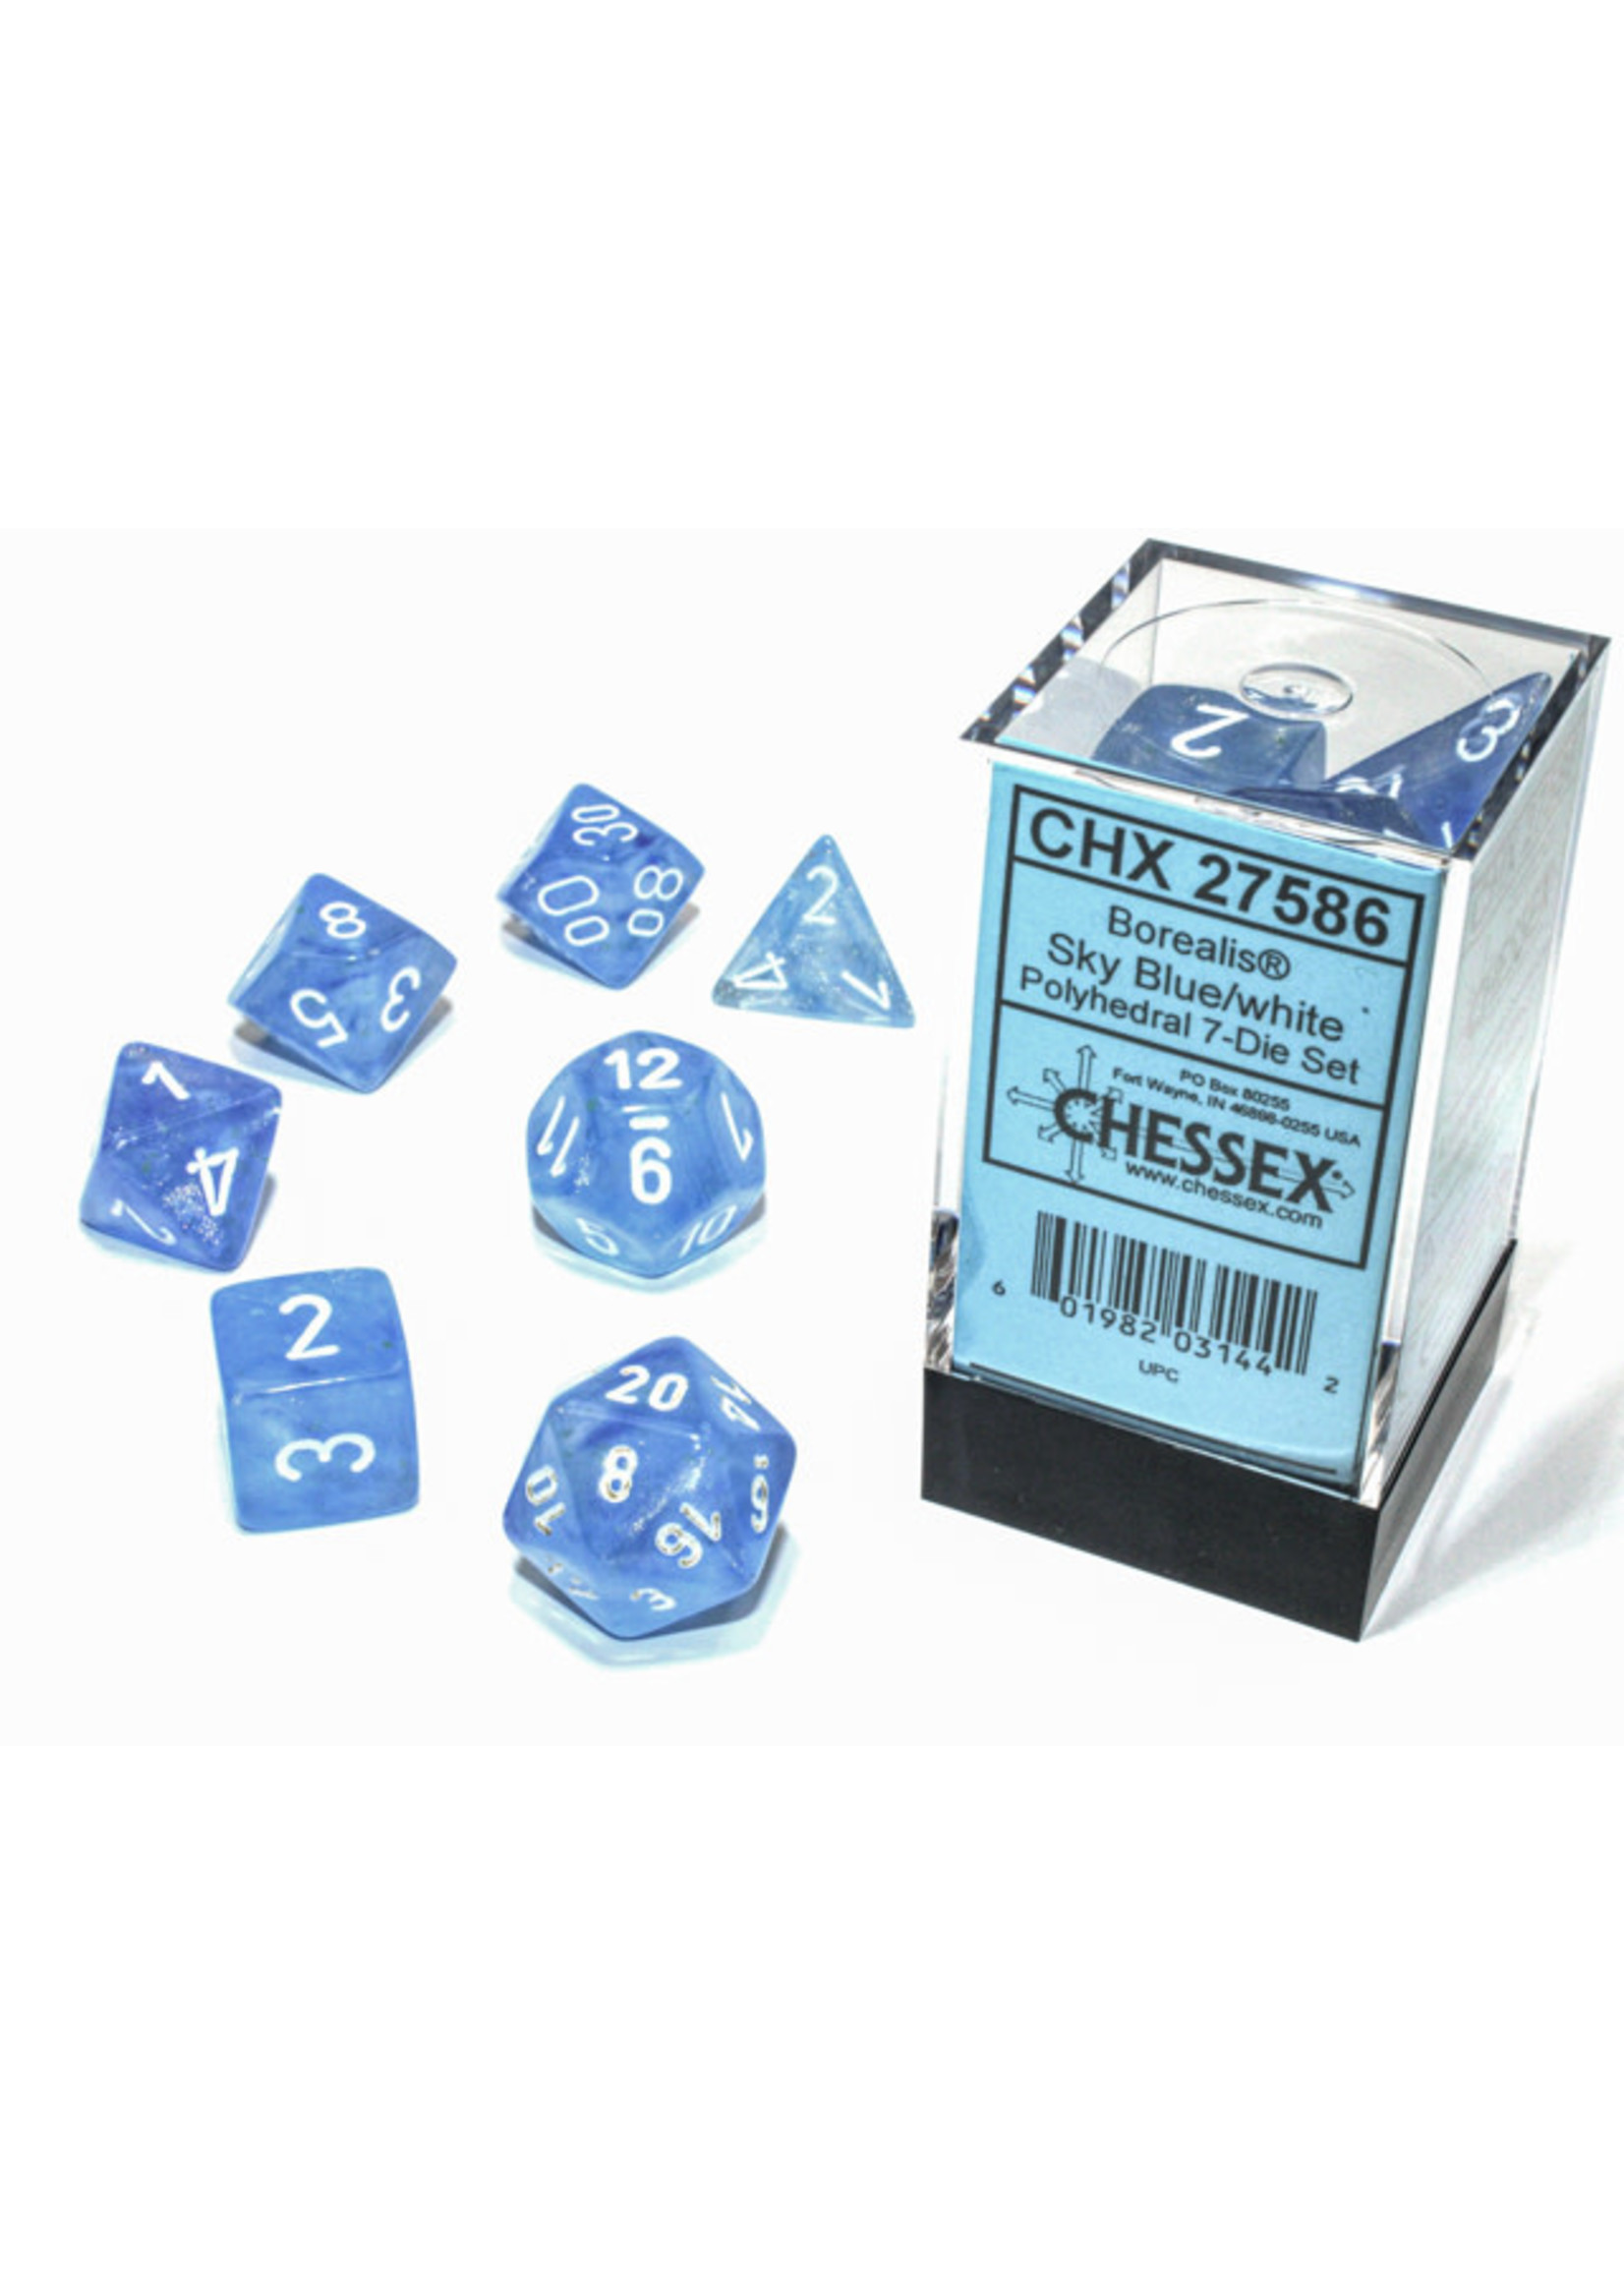 Chessex Dice set - Borealis - Sky blue/White